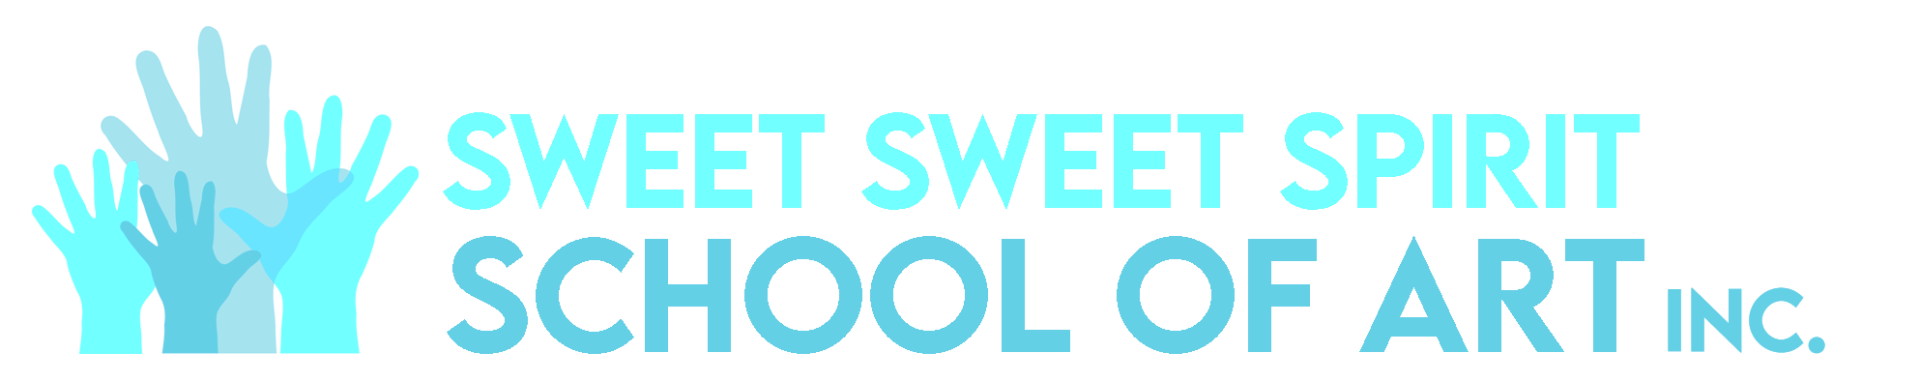 sweet sweet spirit school of art logo